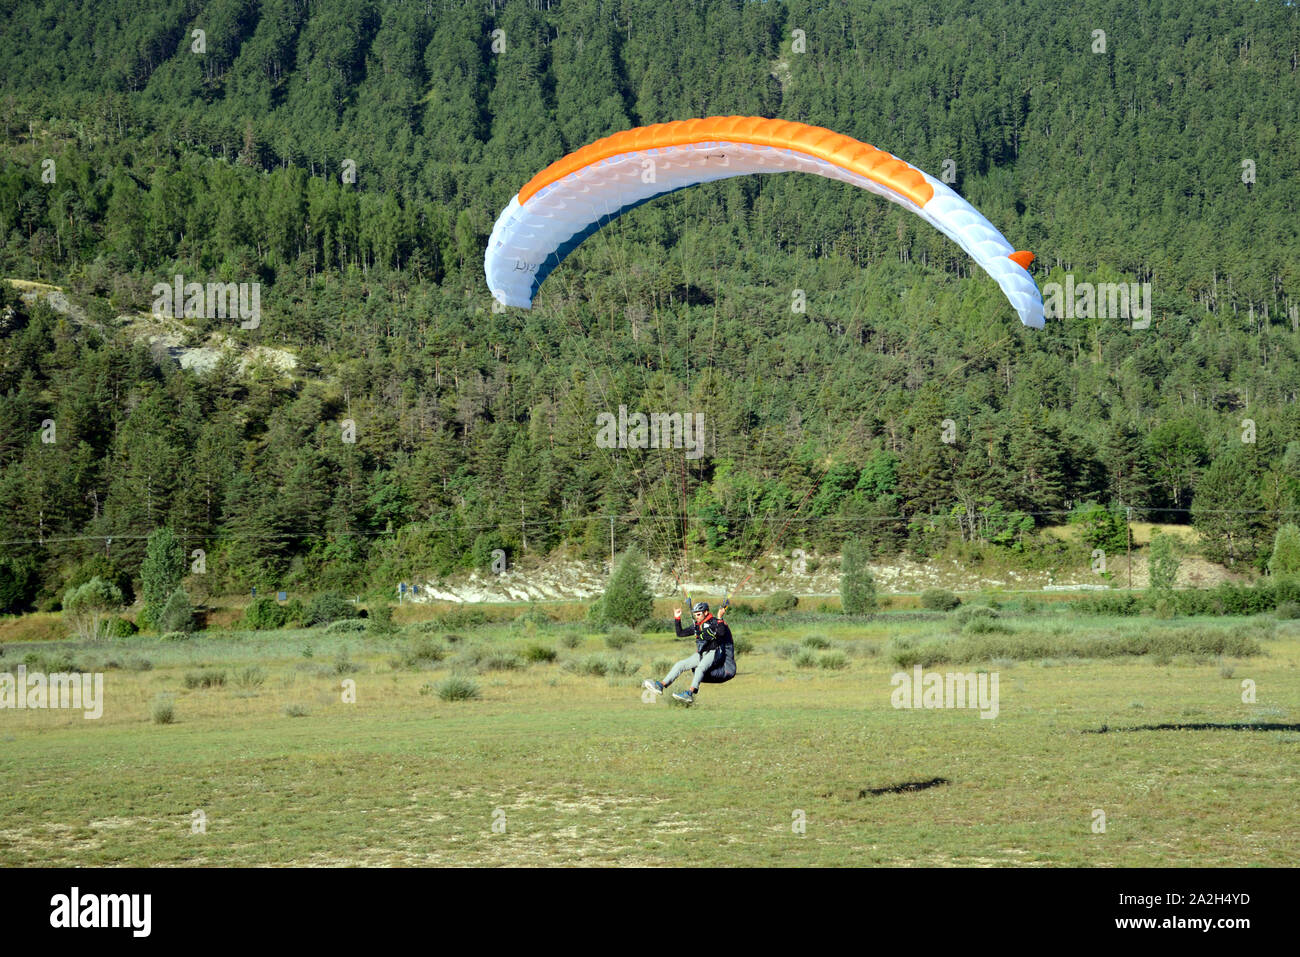 Hängegleiter Landung in Saint-André-les-Alpes in der Verdon Regional Park Alpes-de-Haute-Provence Provence Frankreich Stockfoto